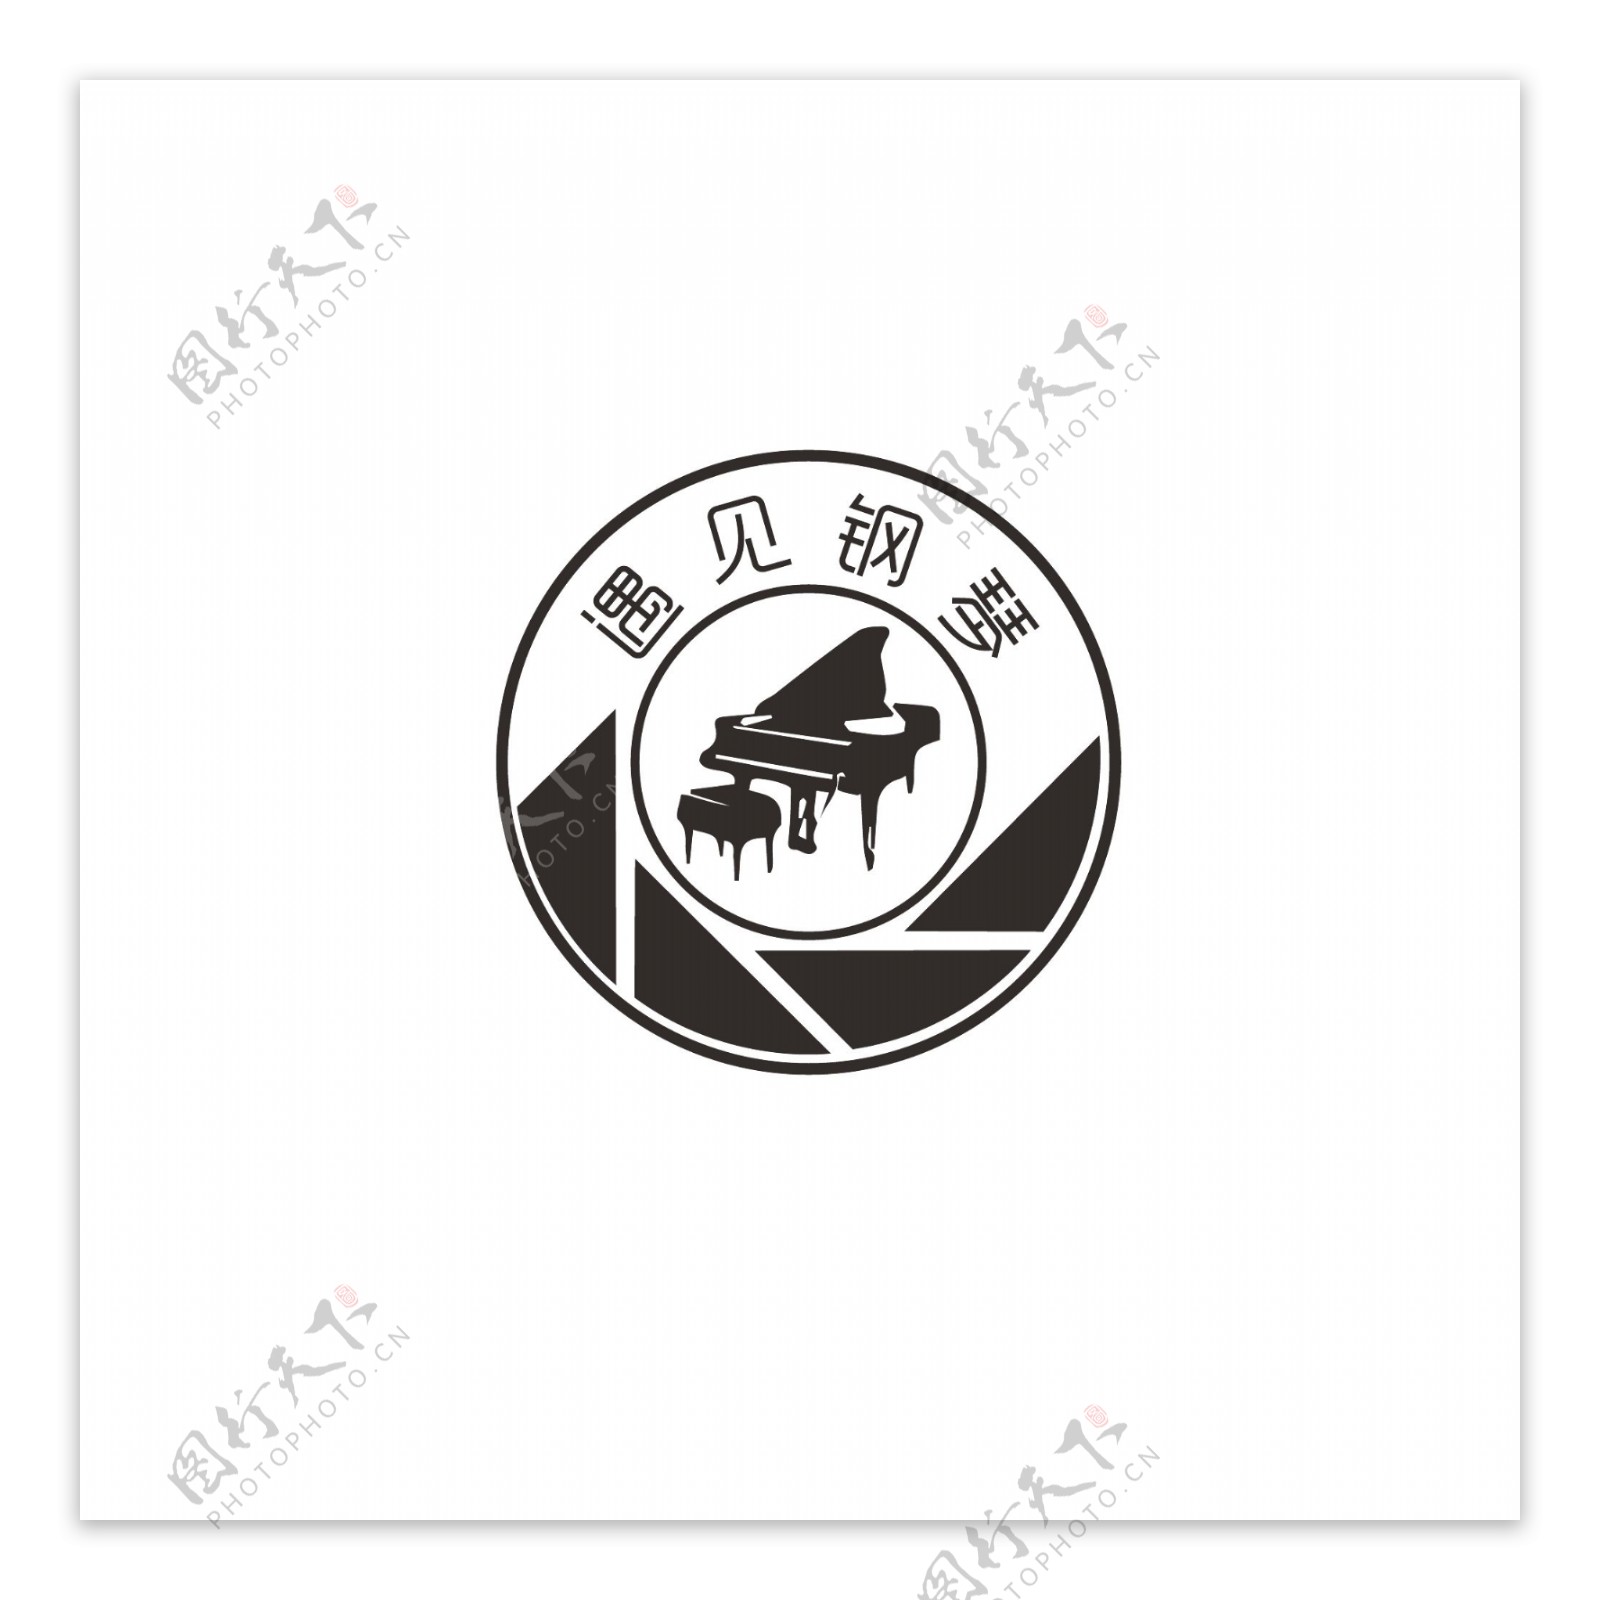 钢琴培训logo设计